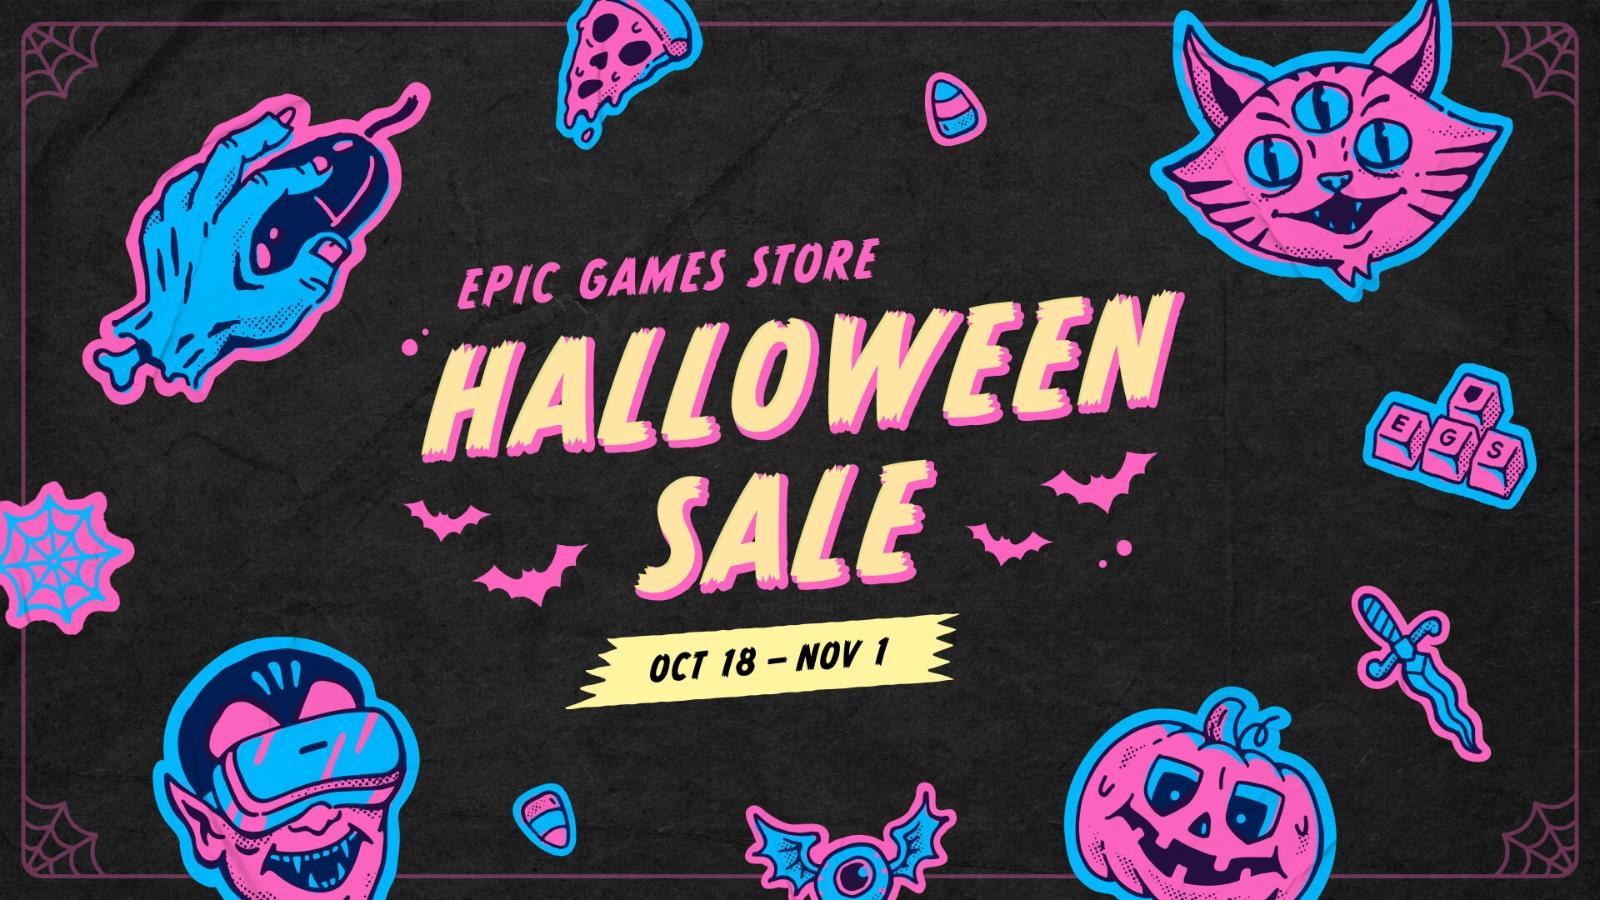 Epic Games Halloween Sale